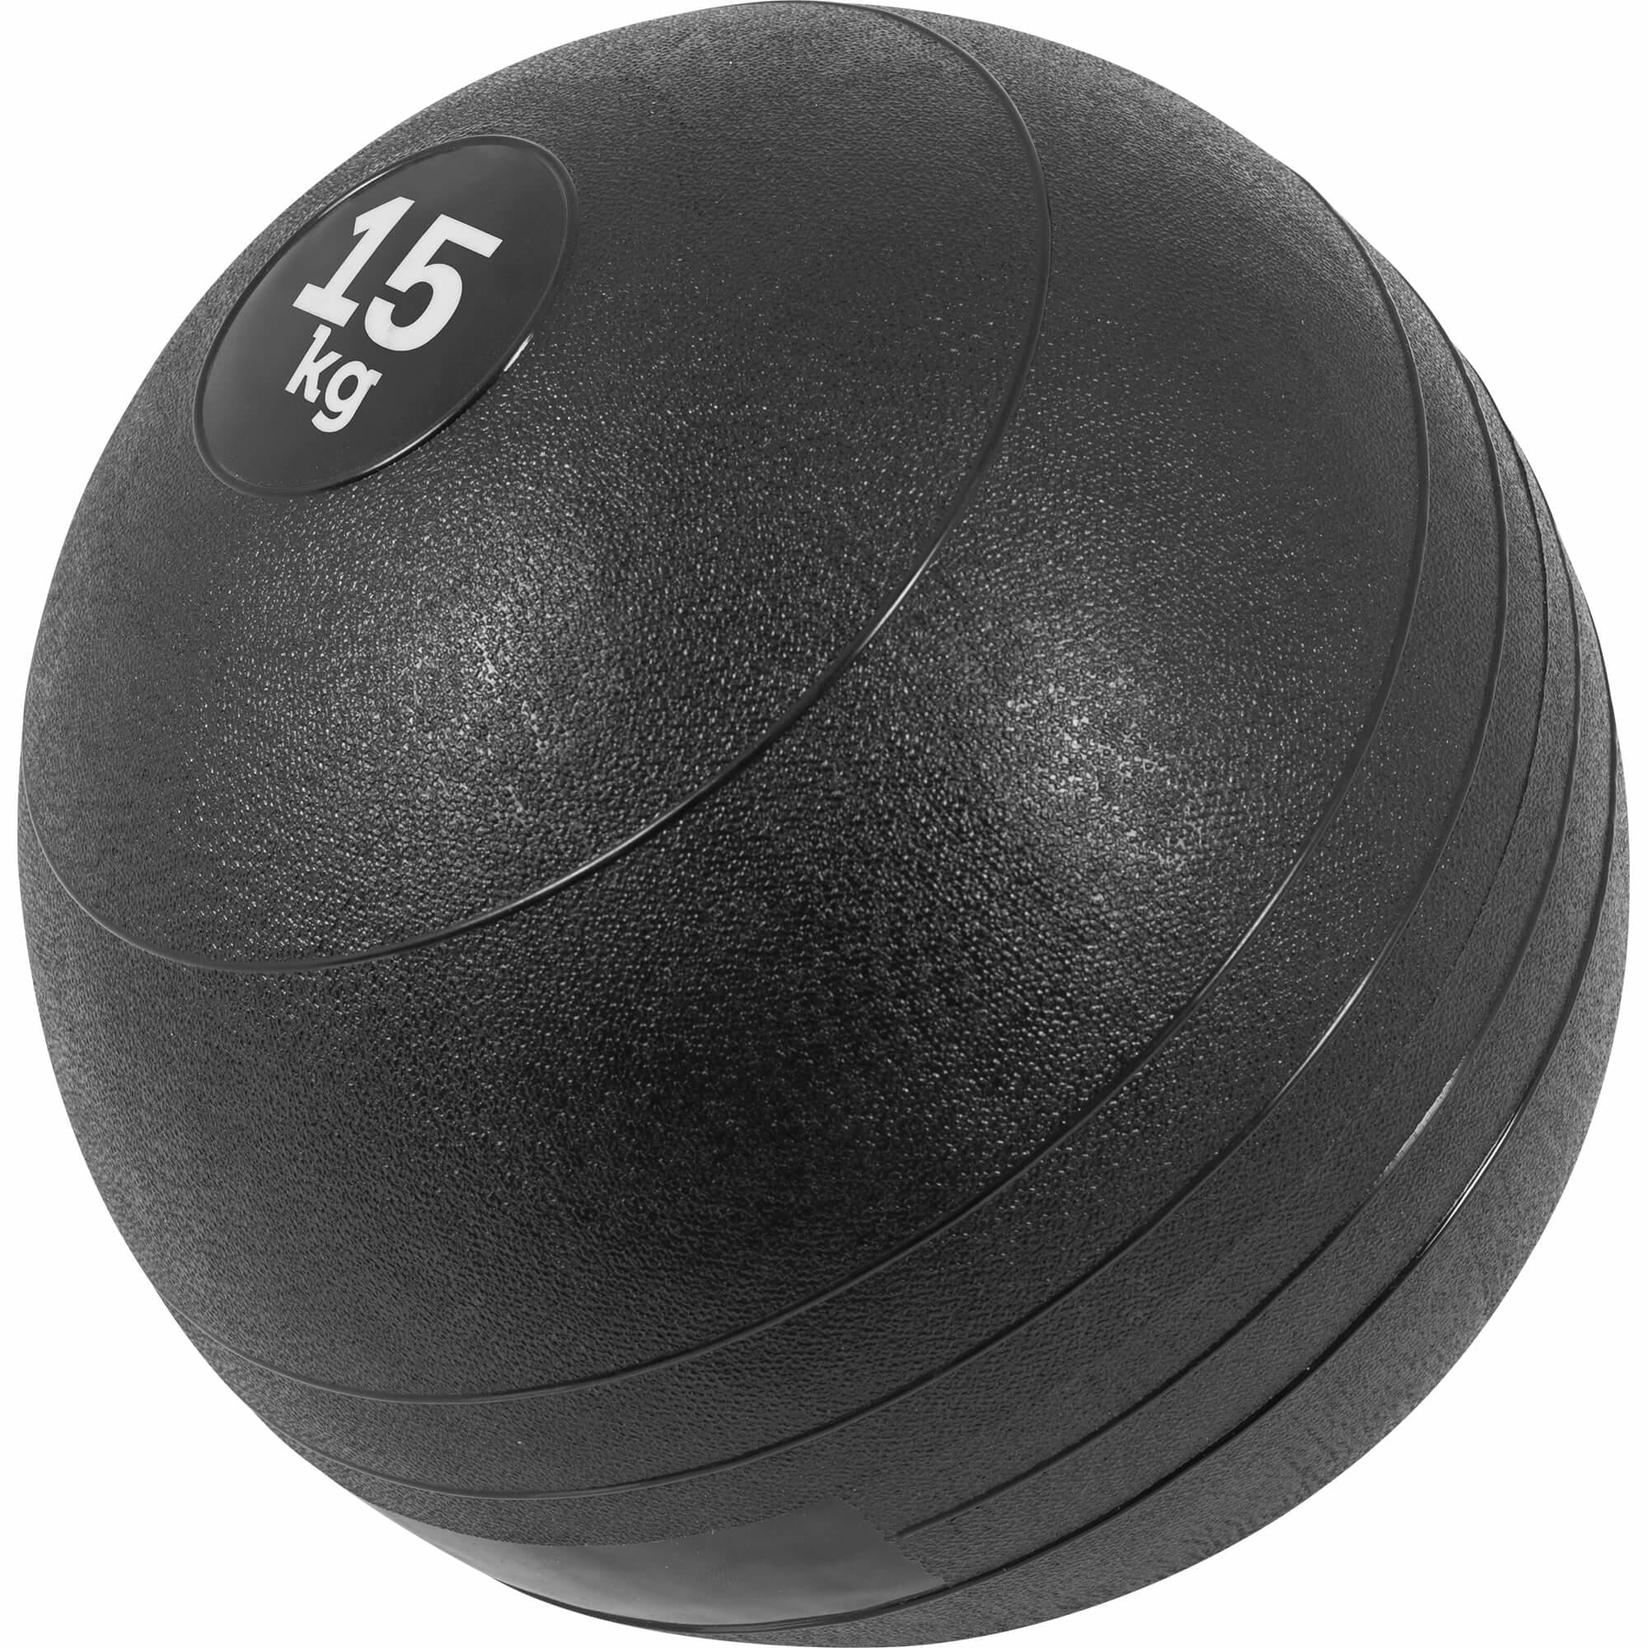 Selected image for GORILLA SPORTS Medicinska lopta Slam Ball 15 kg